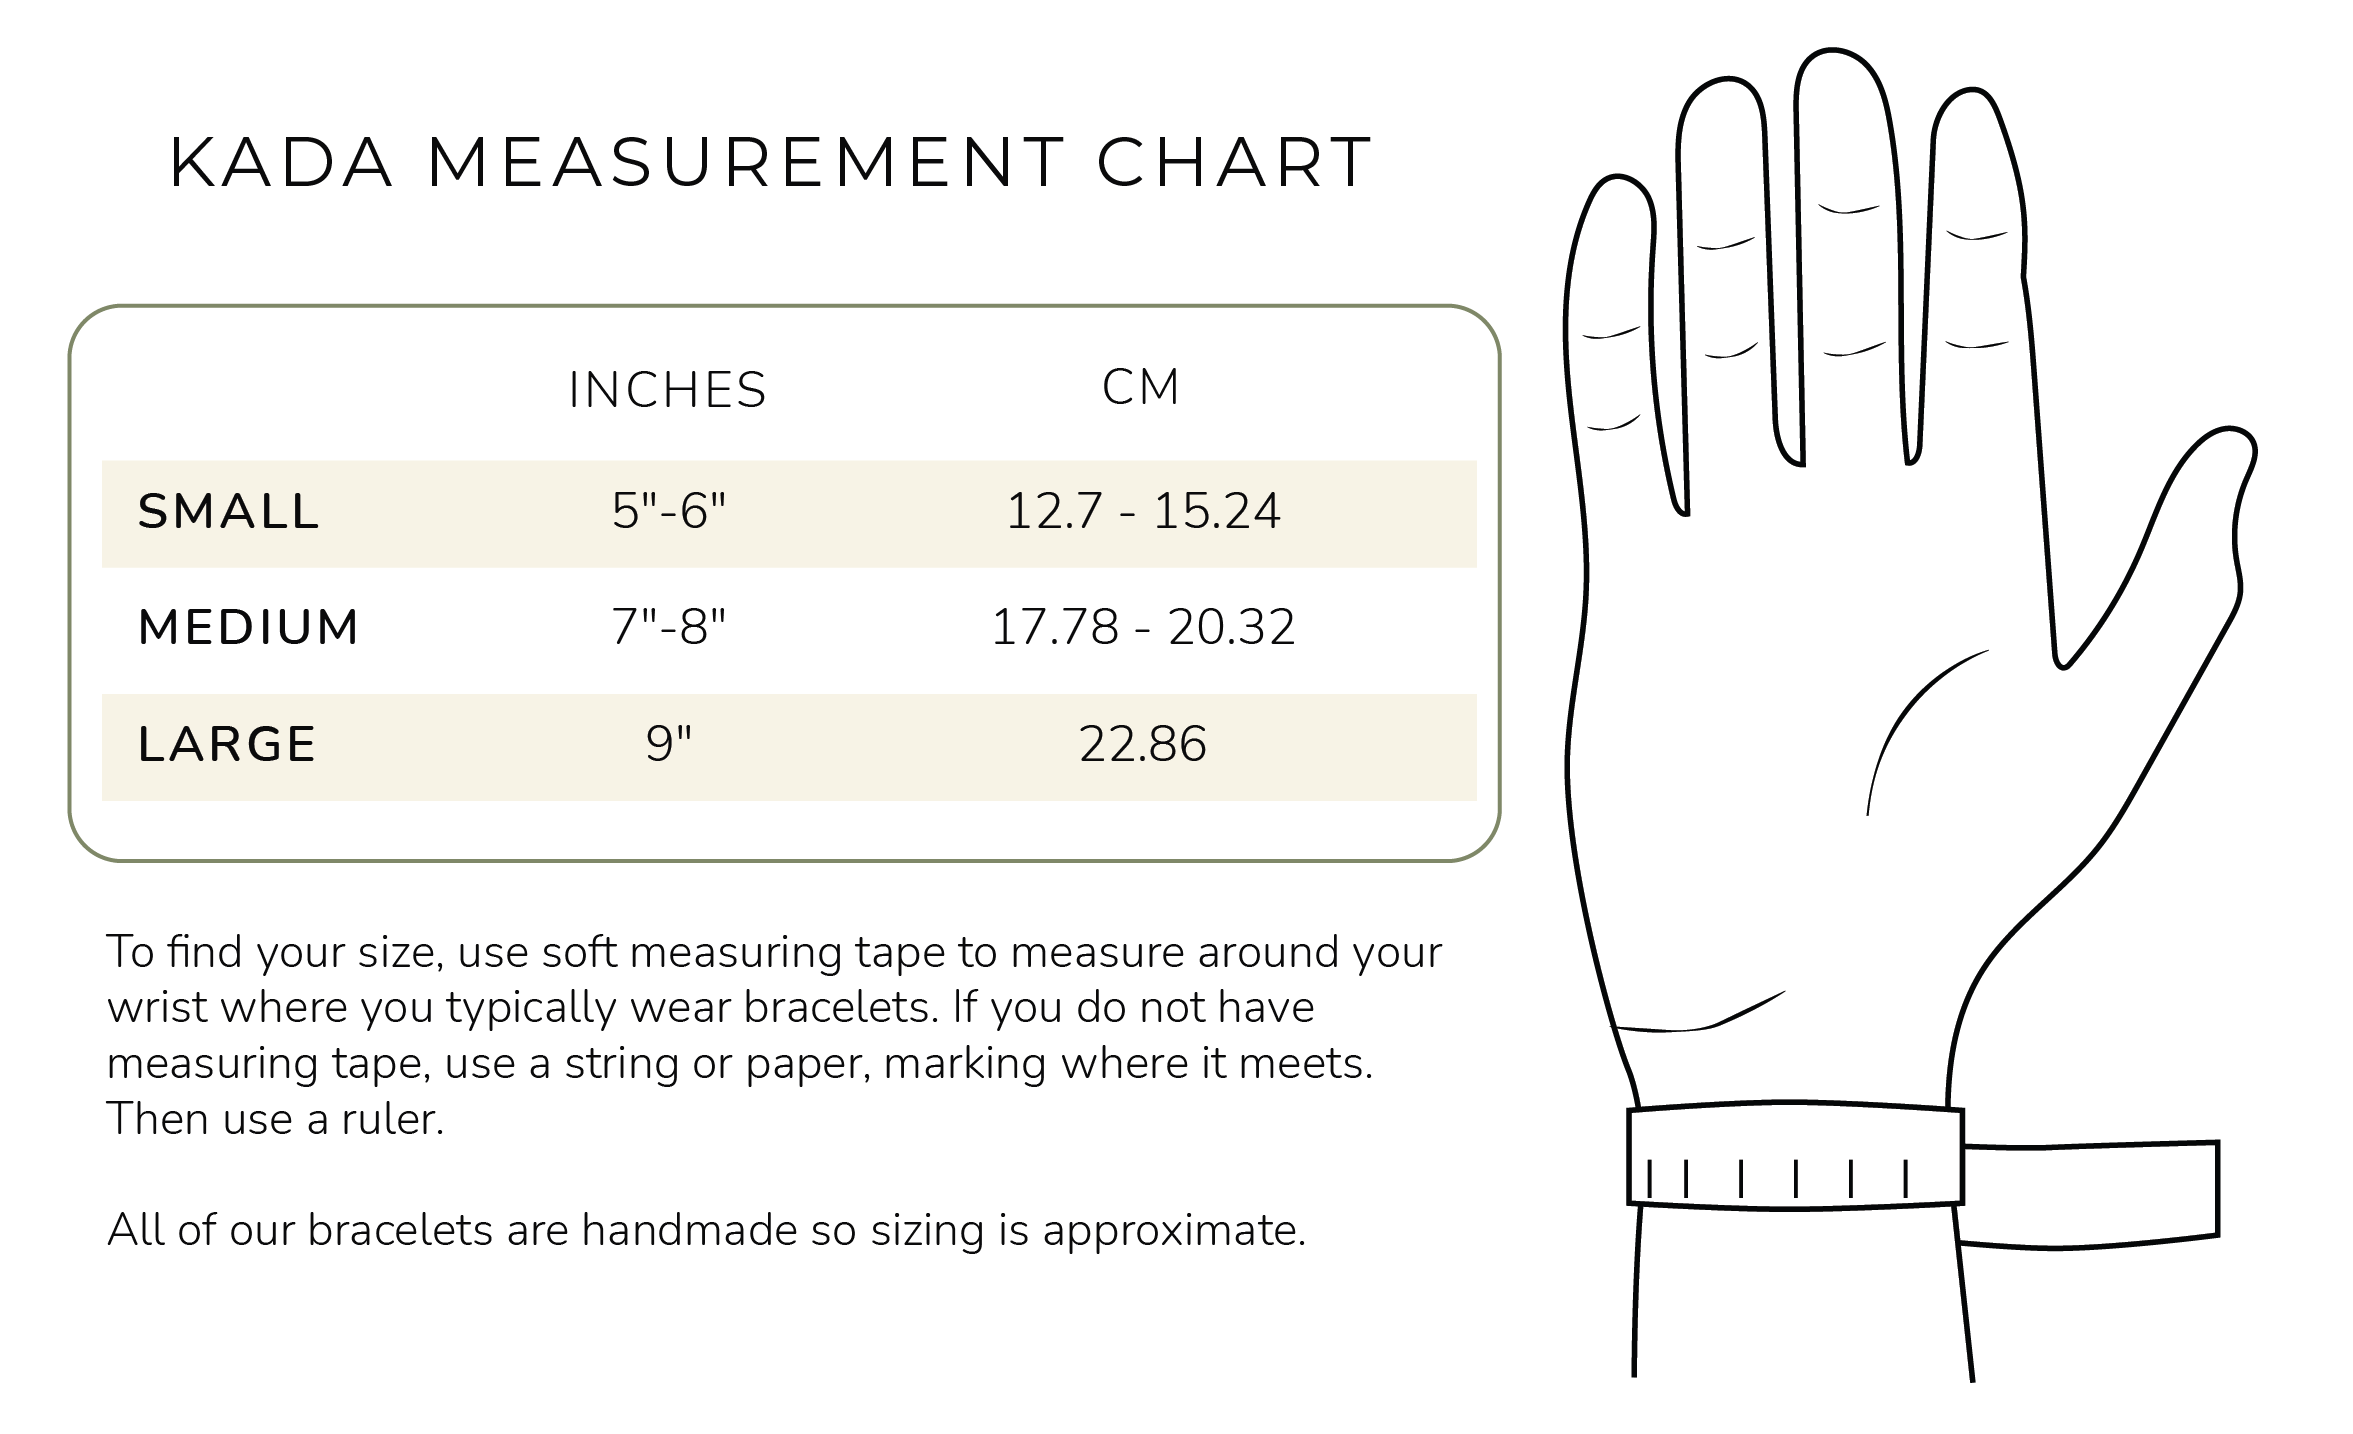 Kada Measurement Chart Desktop View